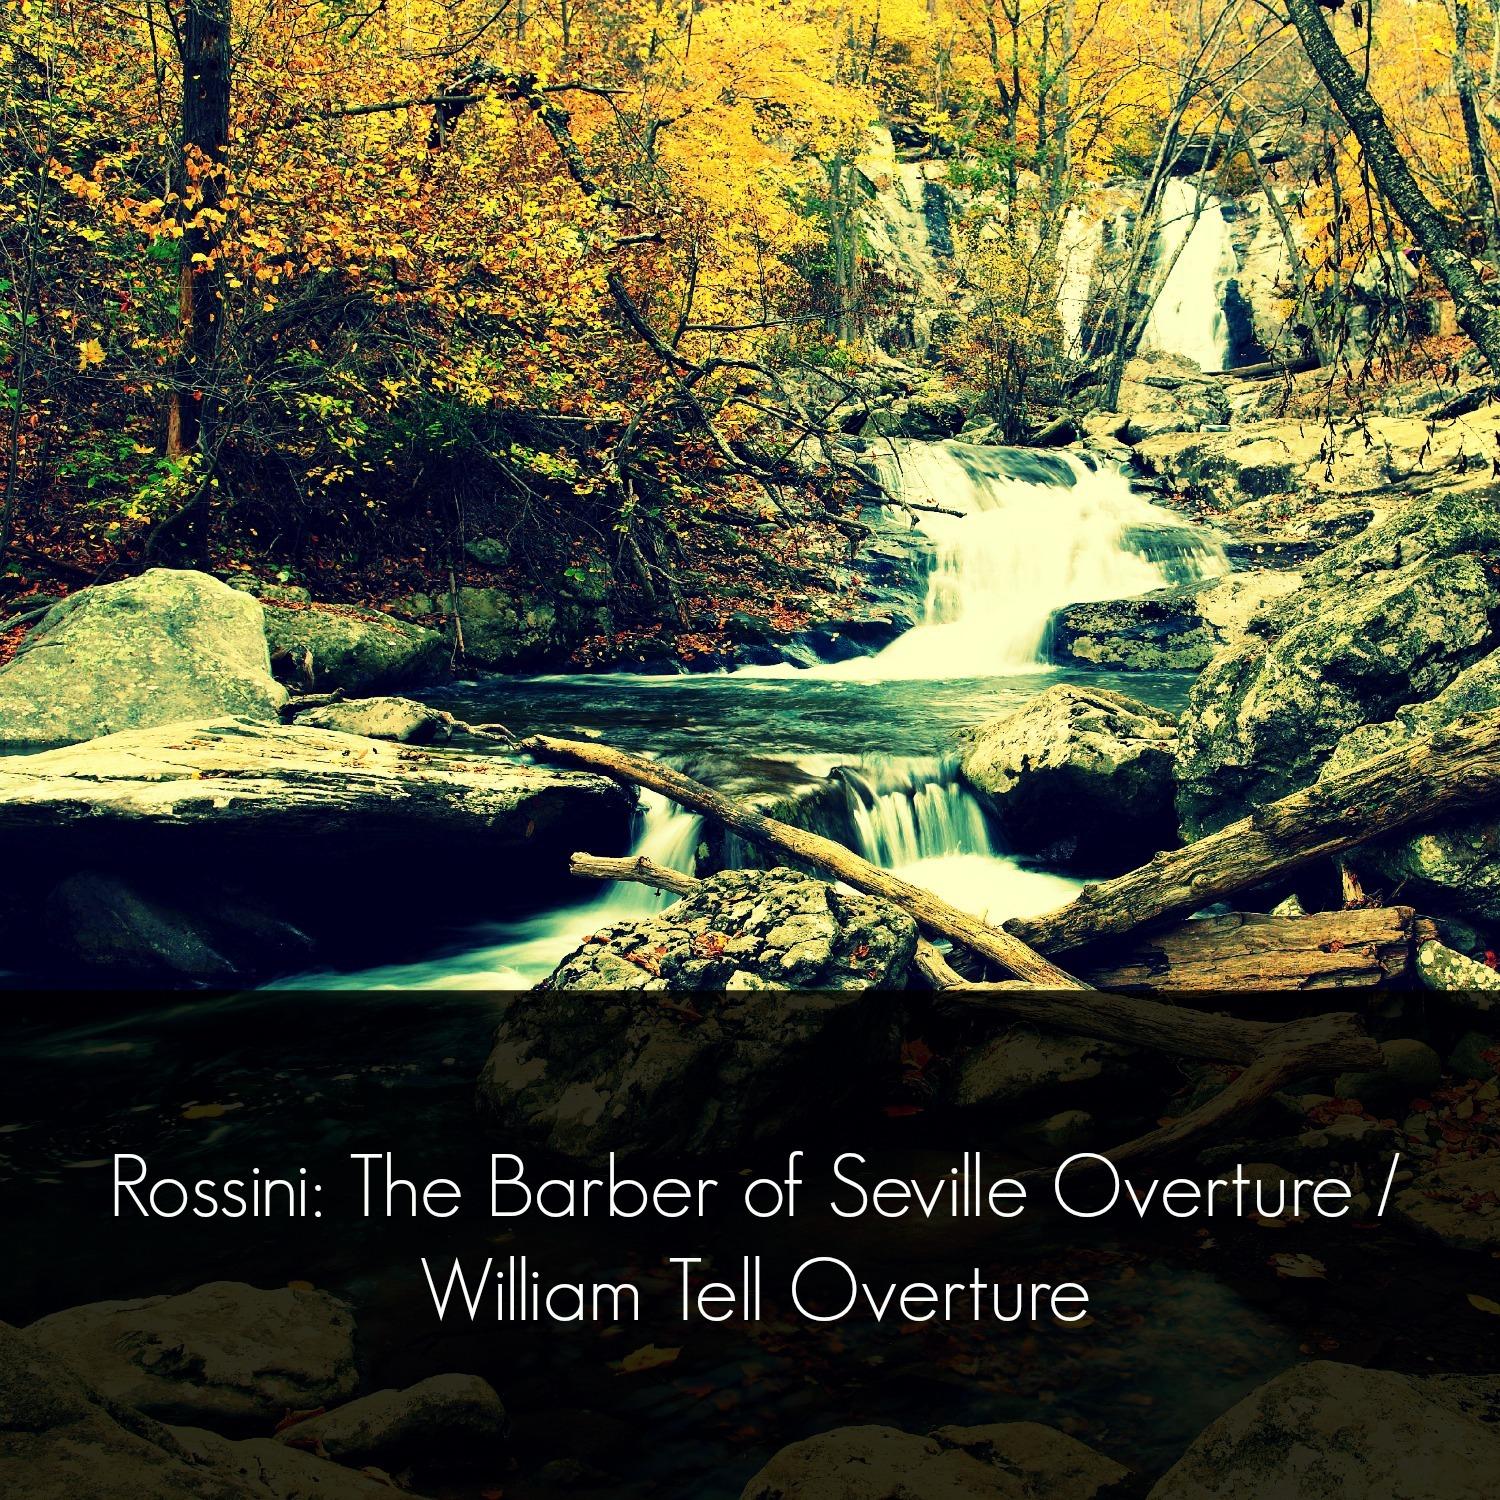 Rossini: The Barber of Seville Overture / William Tell Overture